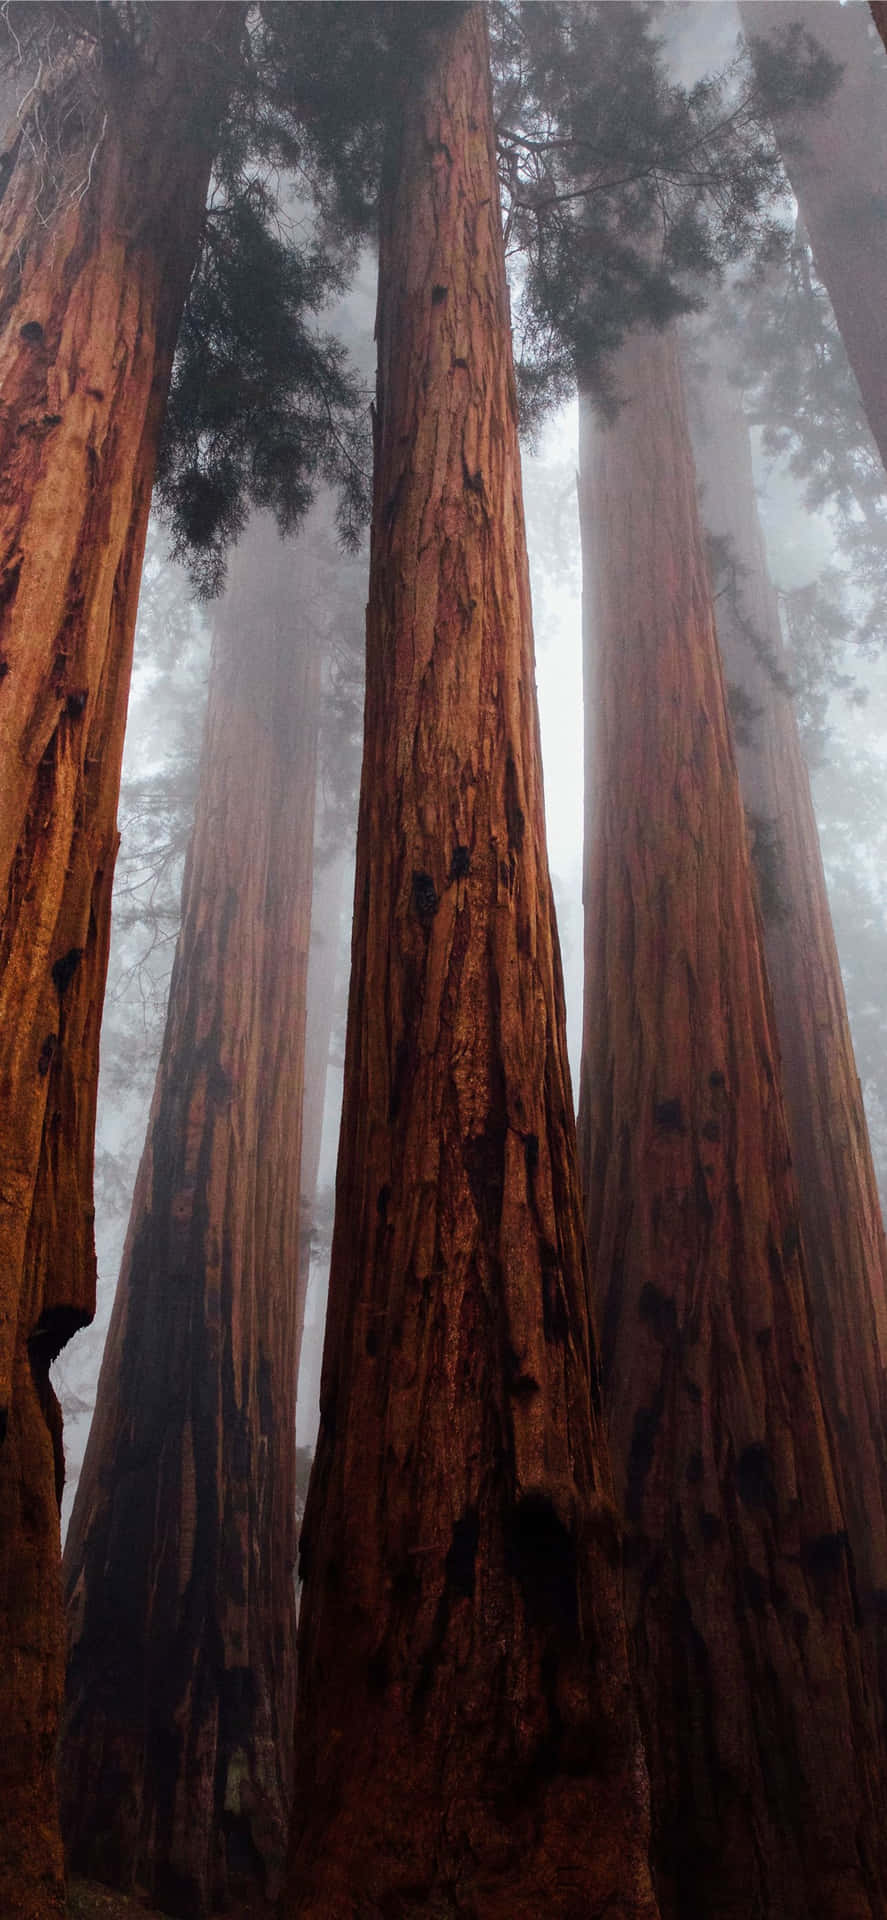 Parquenacional Redwood Bosque Brumoso Fondo de pantalla